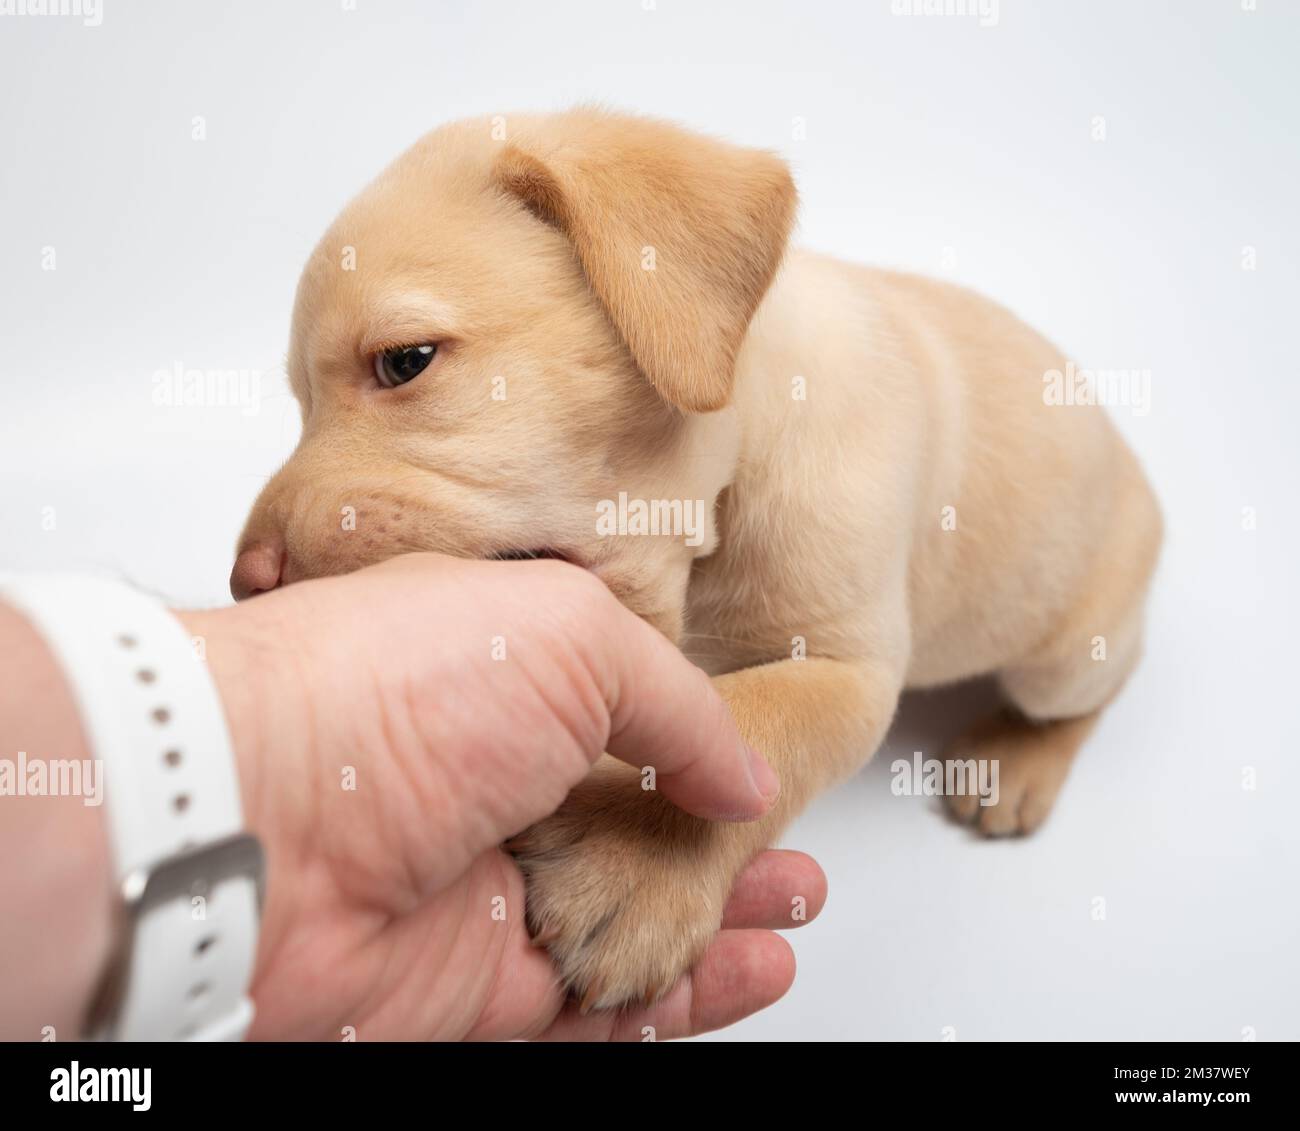 Giocare a mano mordente labrador cucciolo su sfondo bianco studio Foto Stock